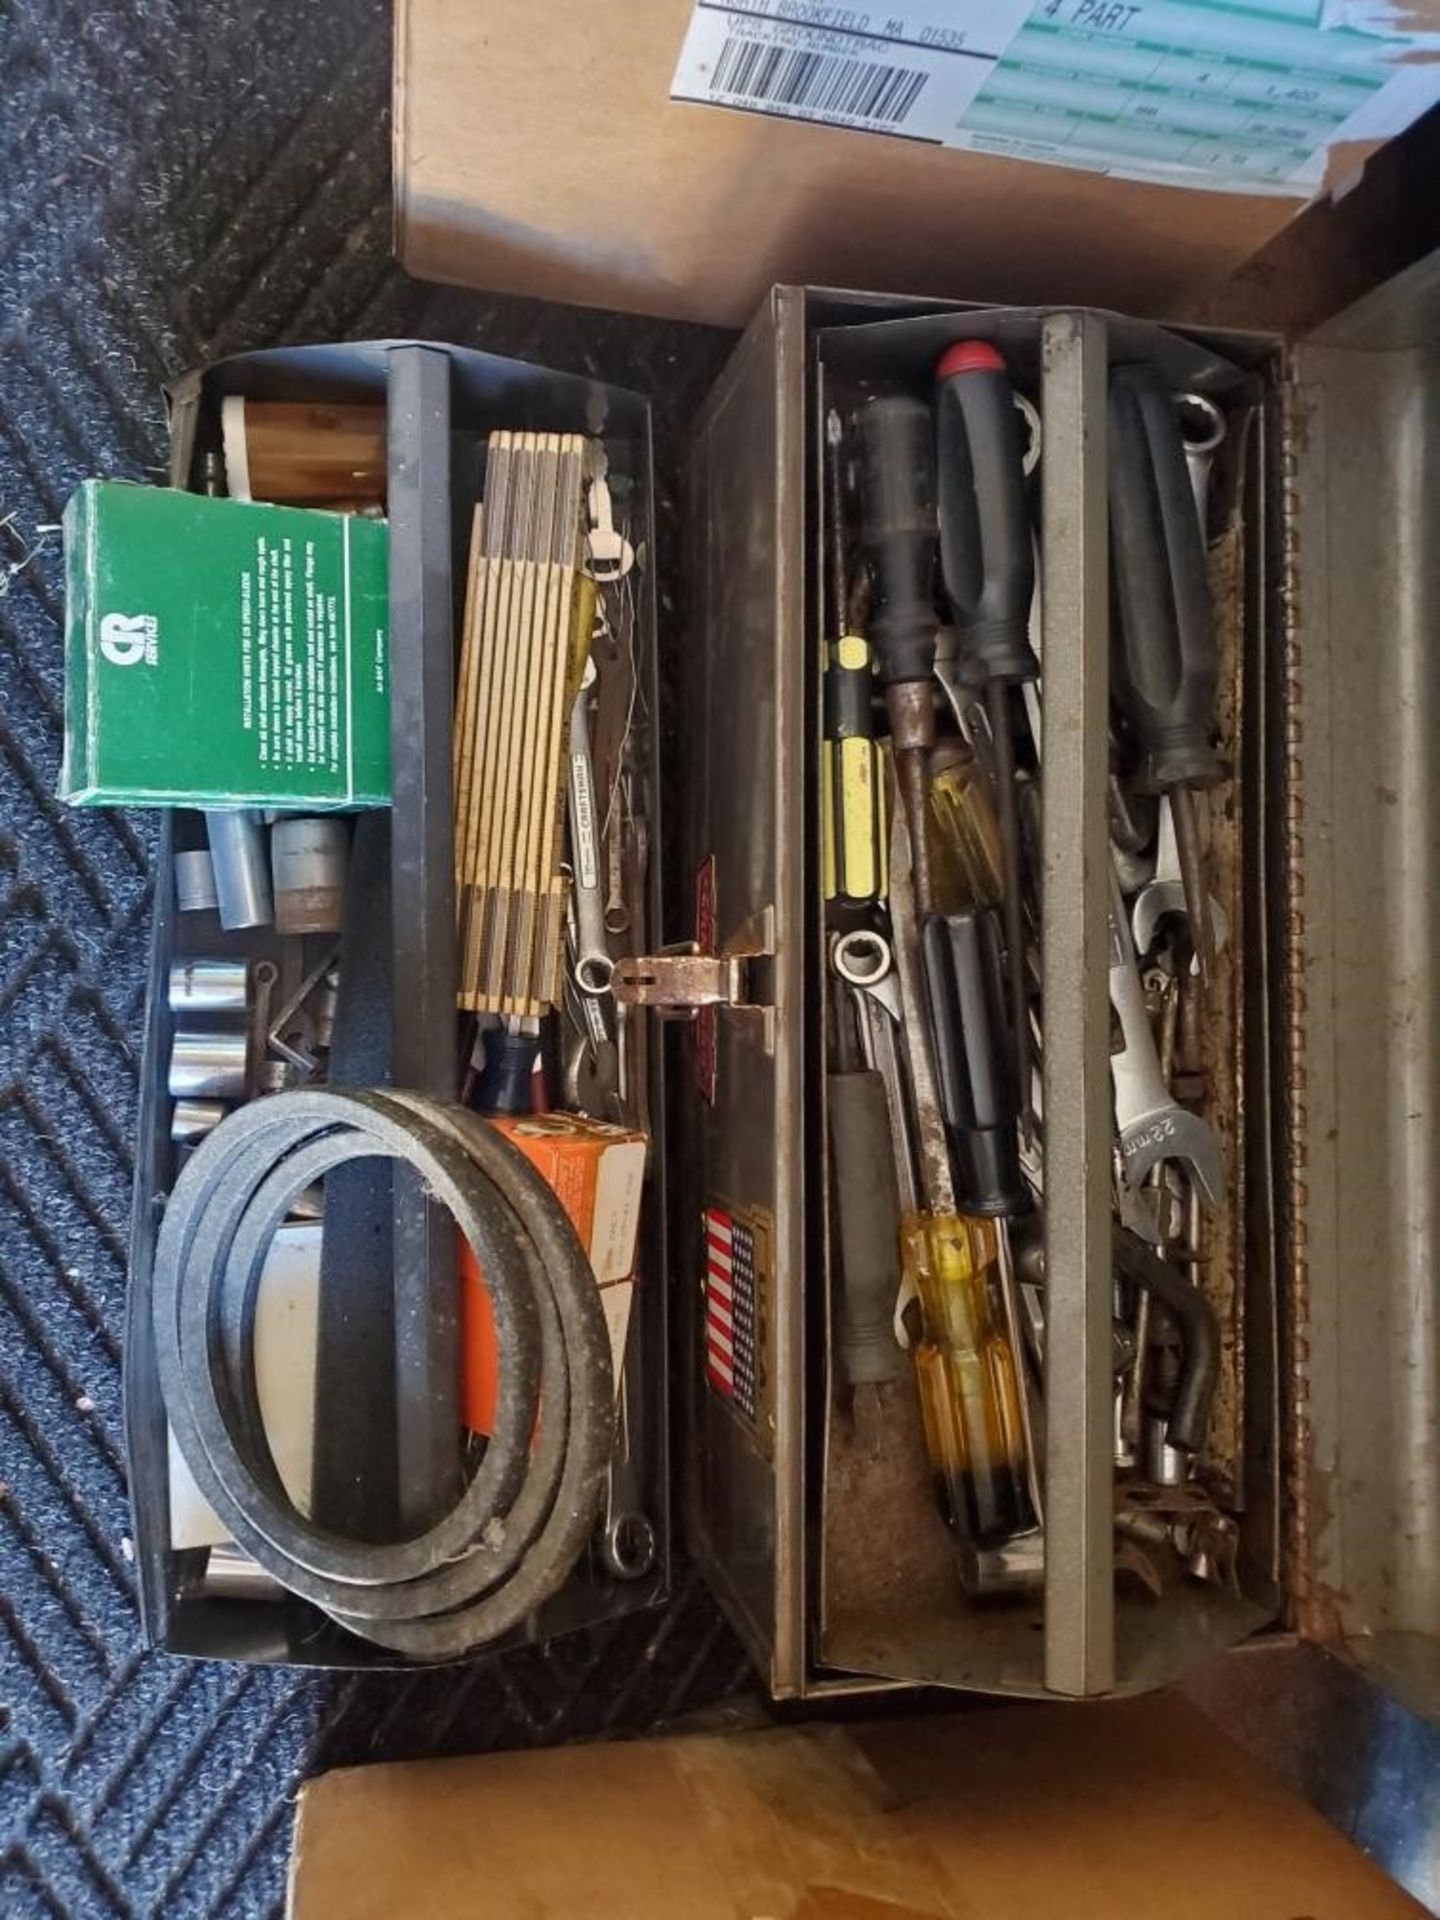 Lot asst hand tools including work lights, tool box, misc light bulbs